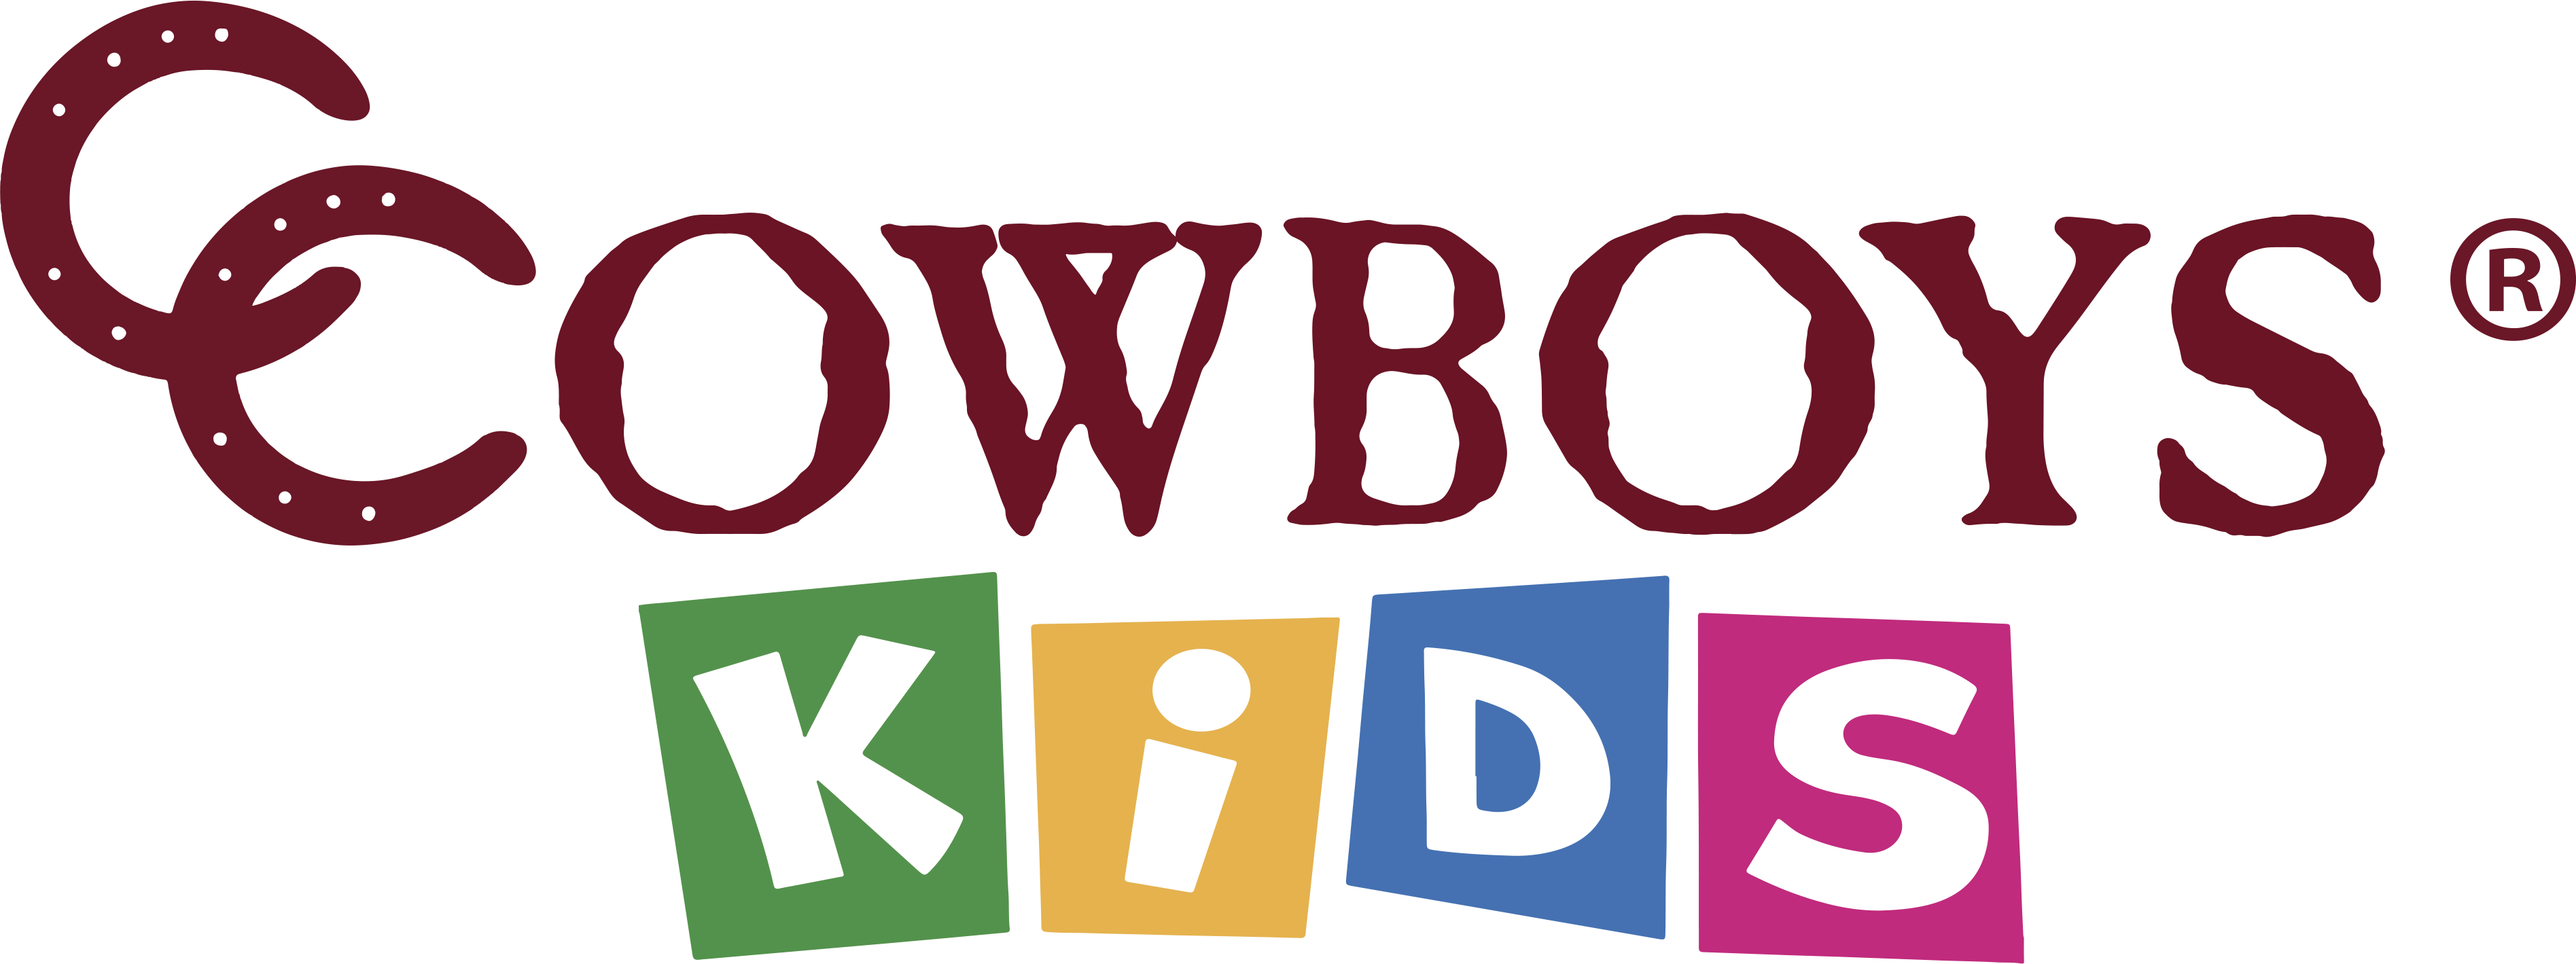 Logo da Cowboys